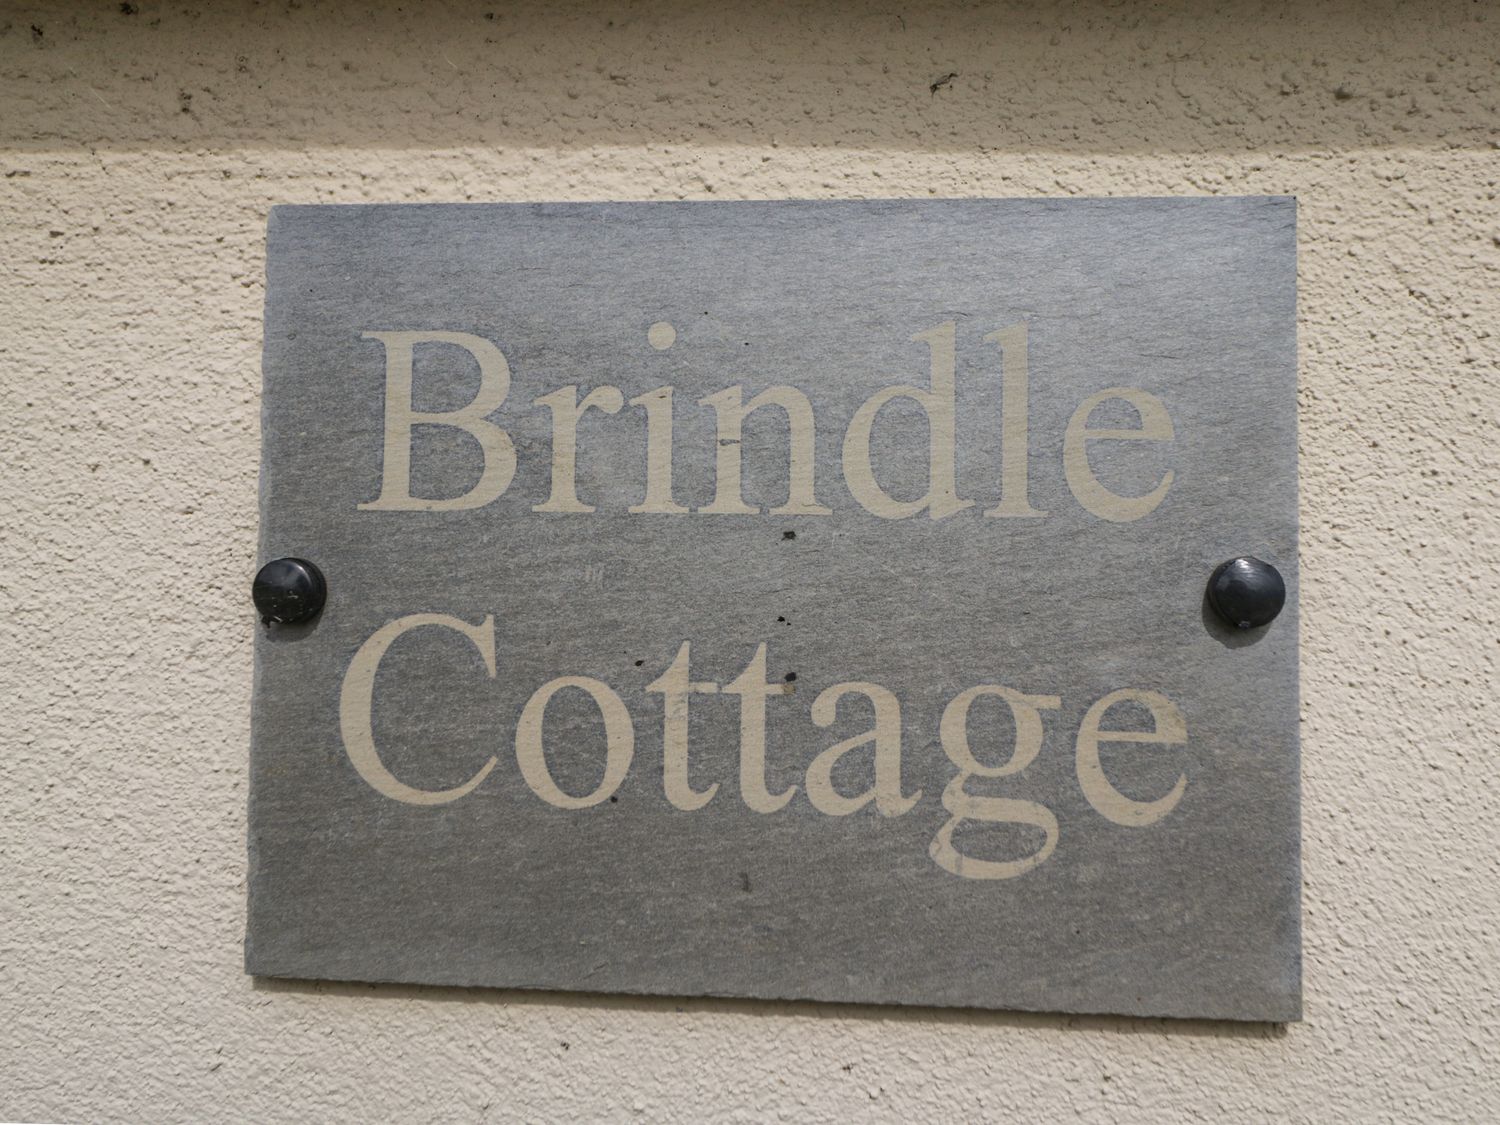 Brindle Cottage, Royal Wootton Bassett 